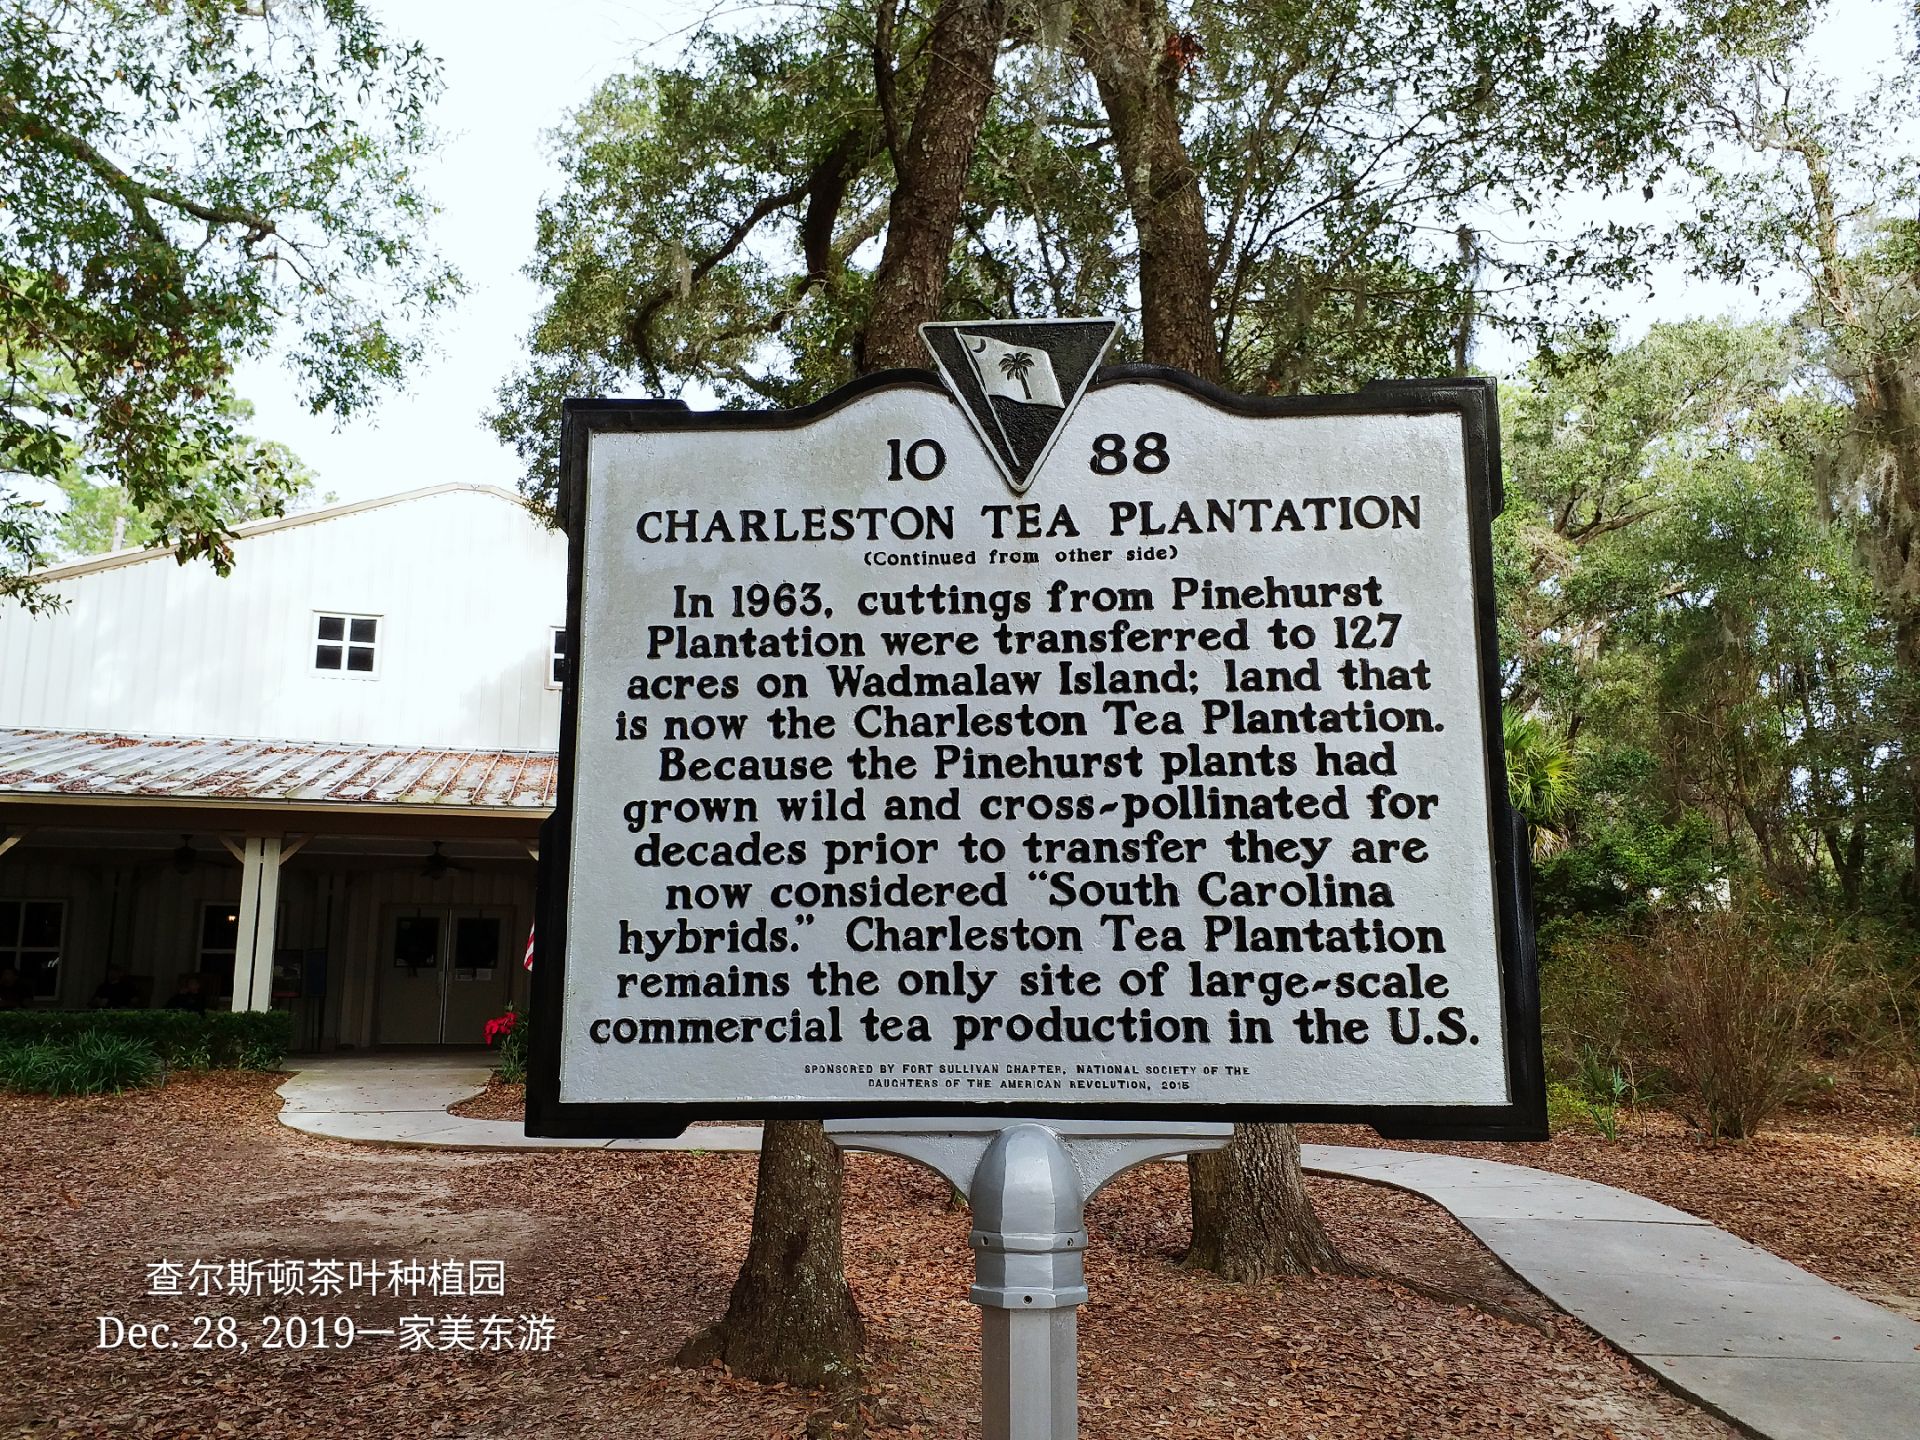 #Dec 28, 2019 #Charleston Tea Plantation # 查尔斯顿·南卡